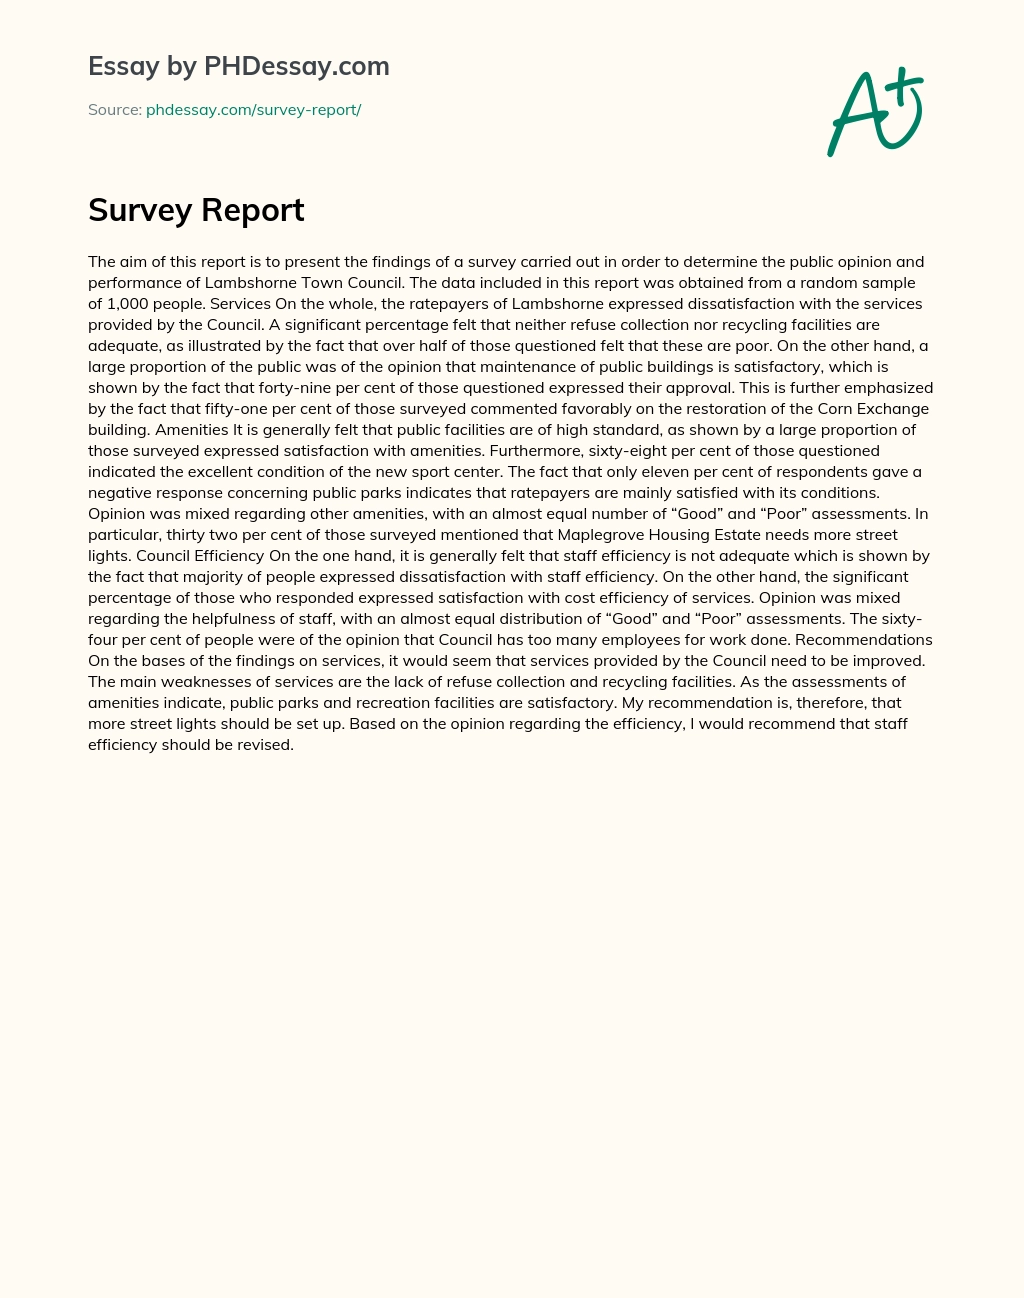 Survey Report essay